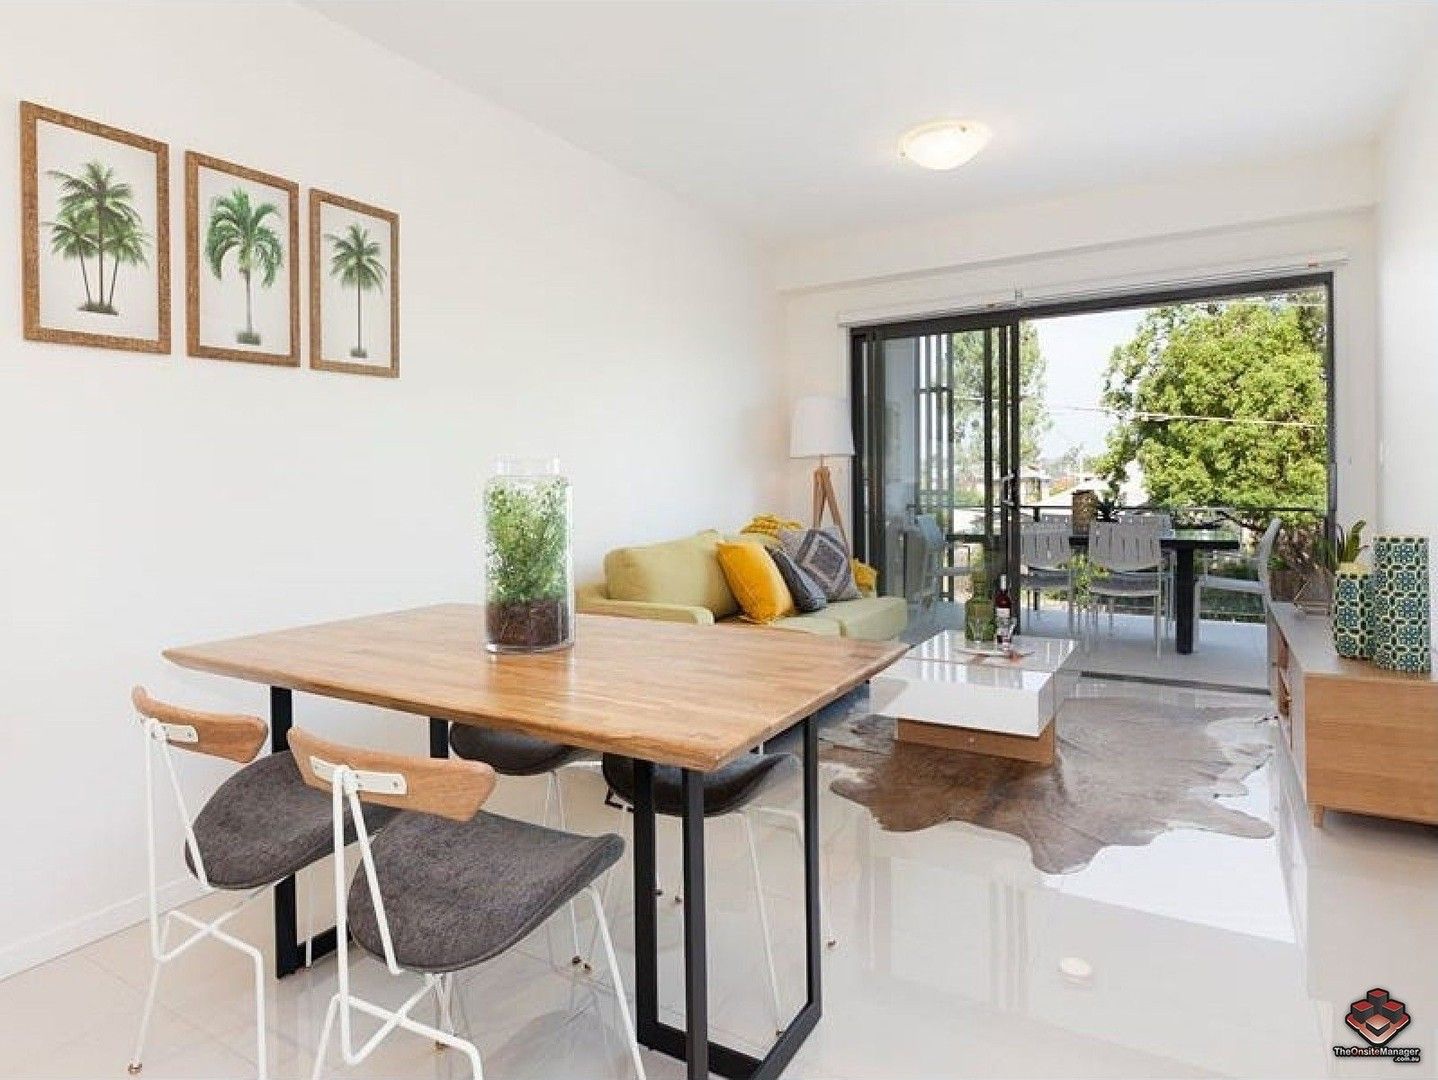 2 bedrooms Apartment / Unit / Flat in ID:21124926/699 Oxley Road CORINDA QLD, 4075